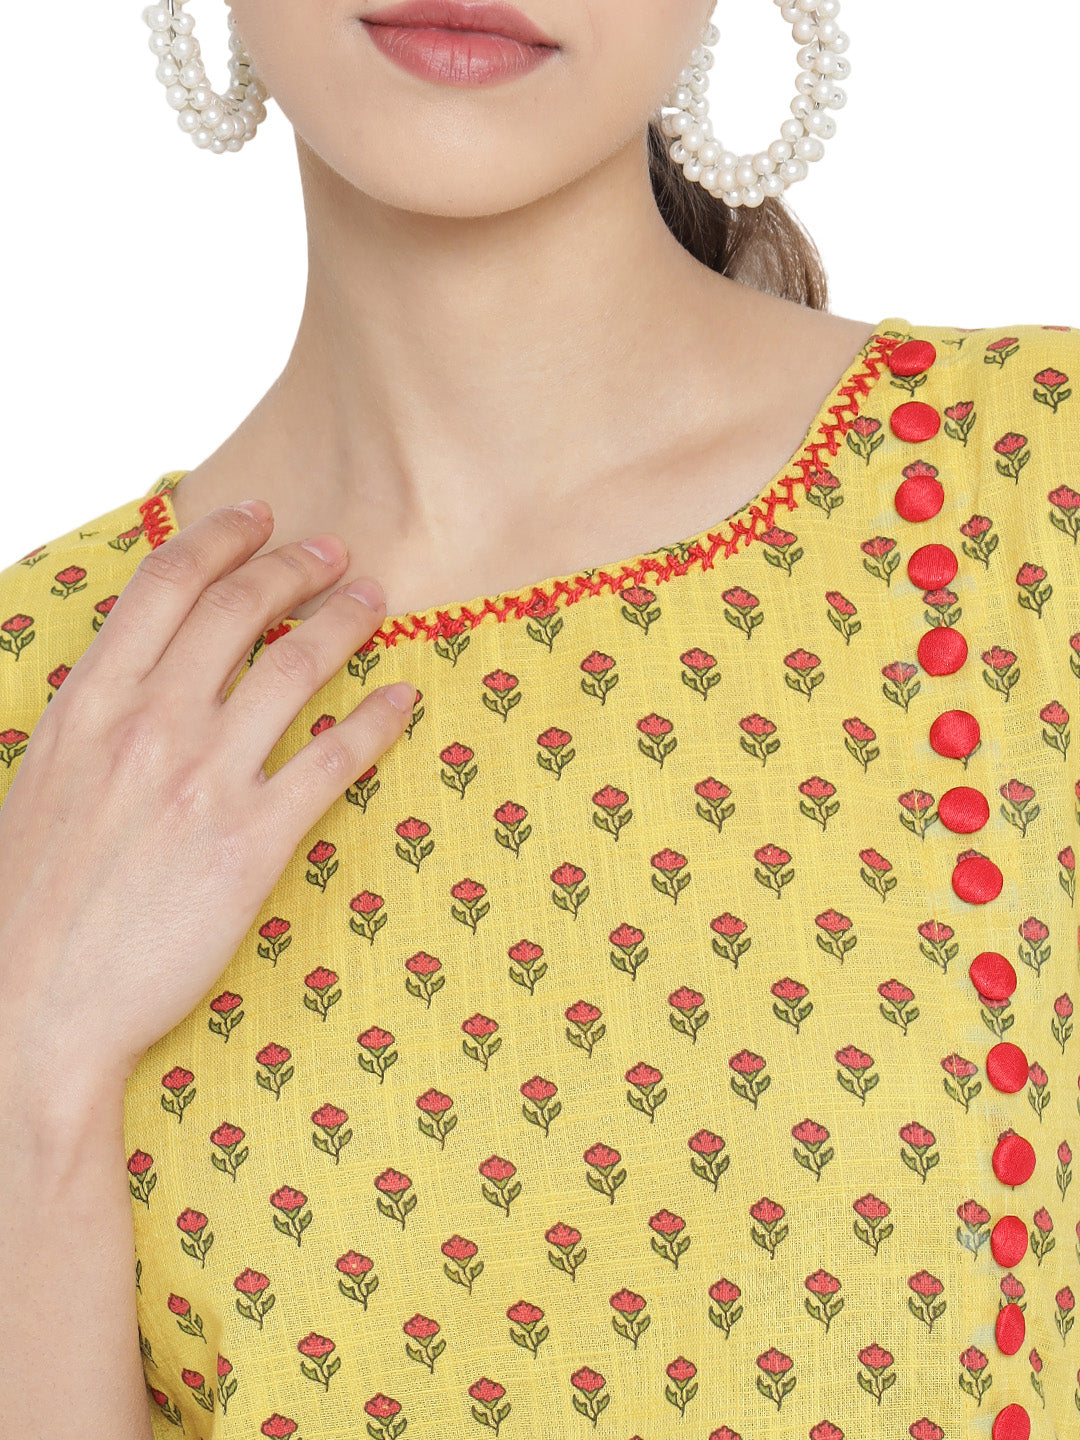 womens cotton rayon floral print straight kurta palazzo set yellow red